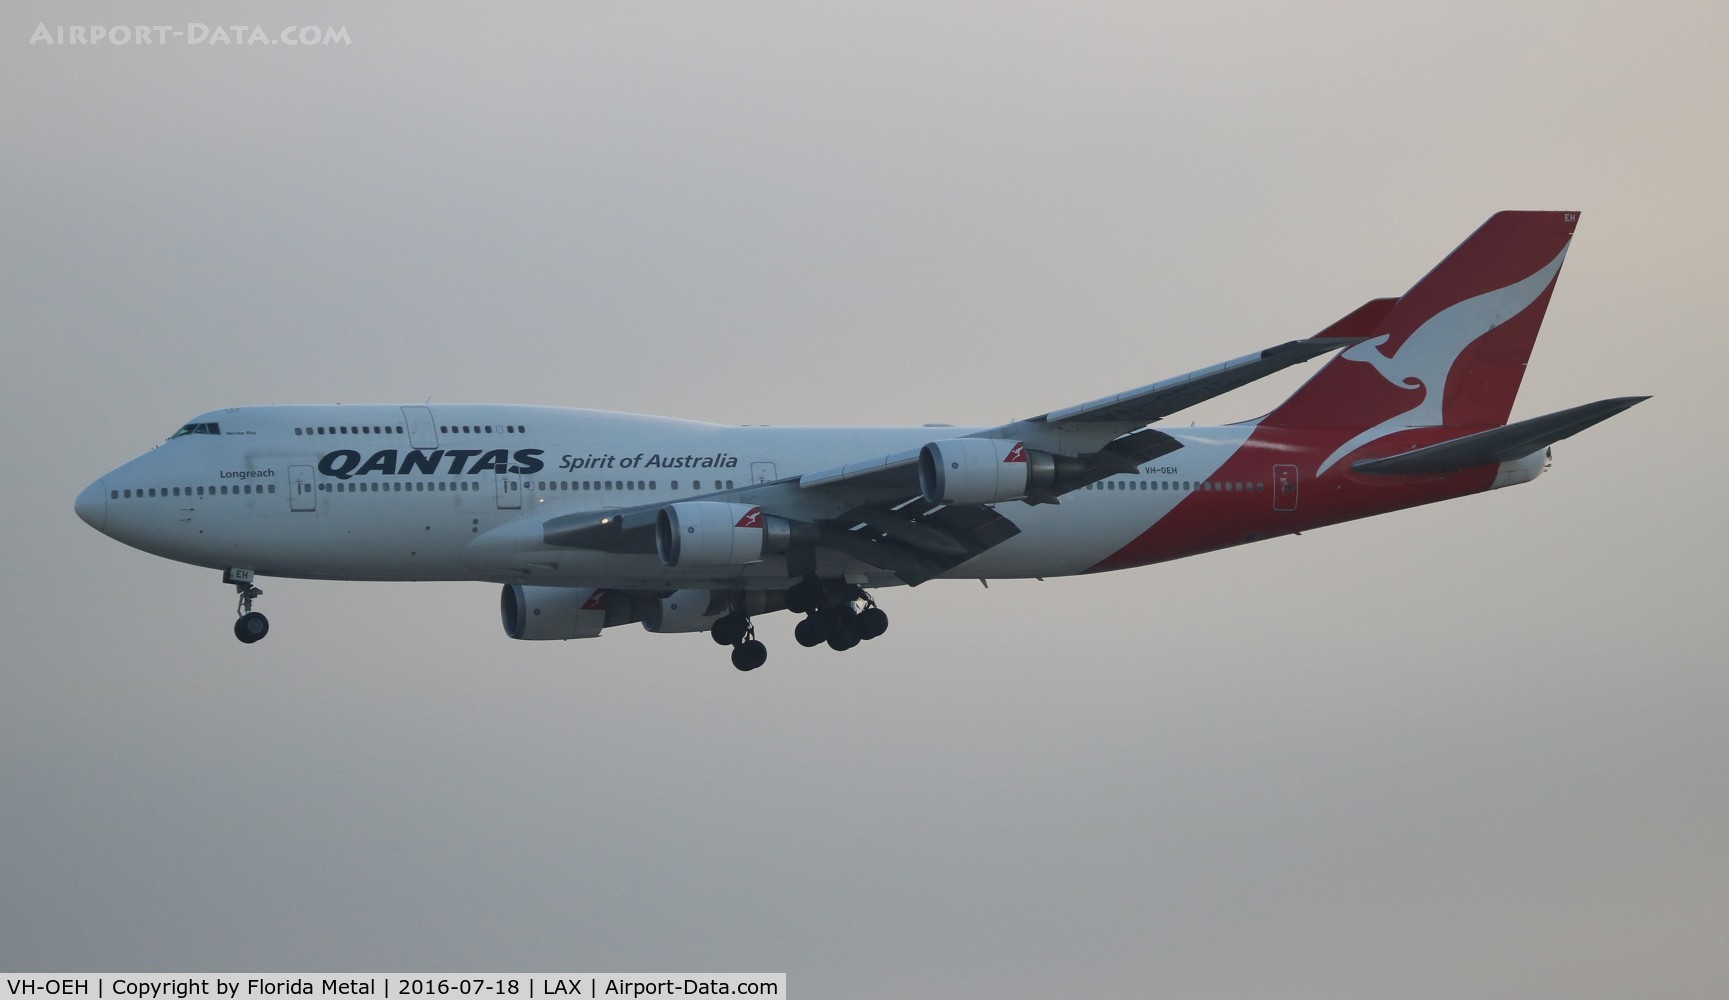 VH-OEH, 2003 Boeing 747-438/ER C/N 32912, Qantas